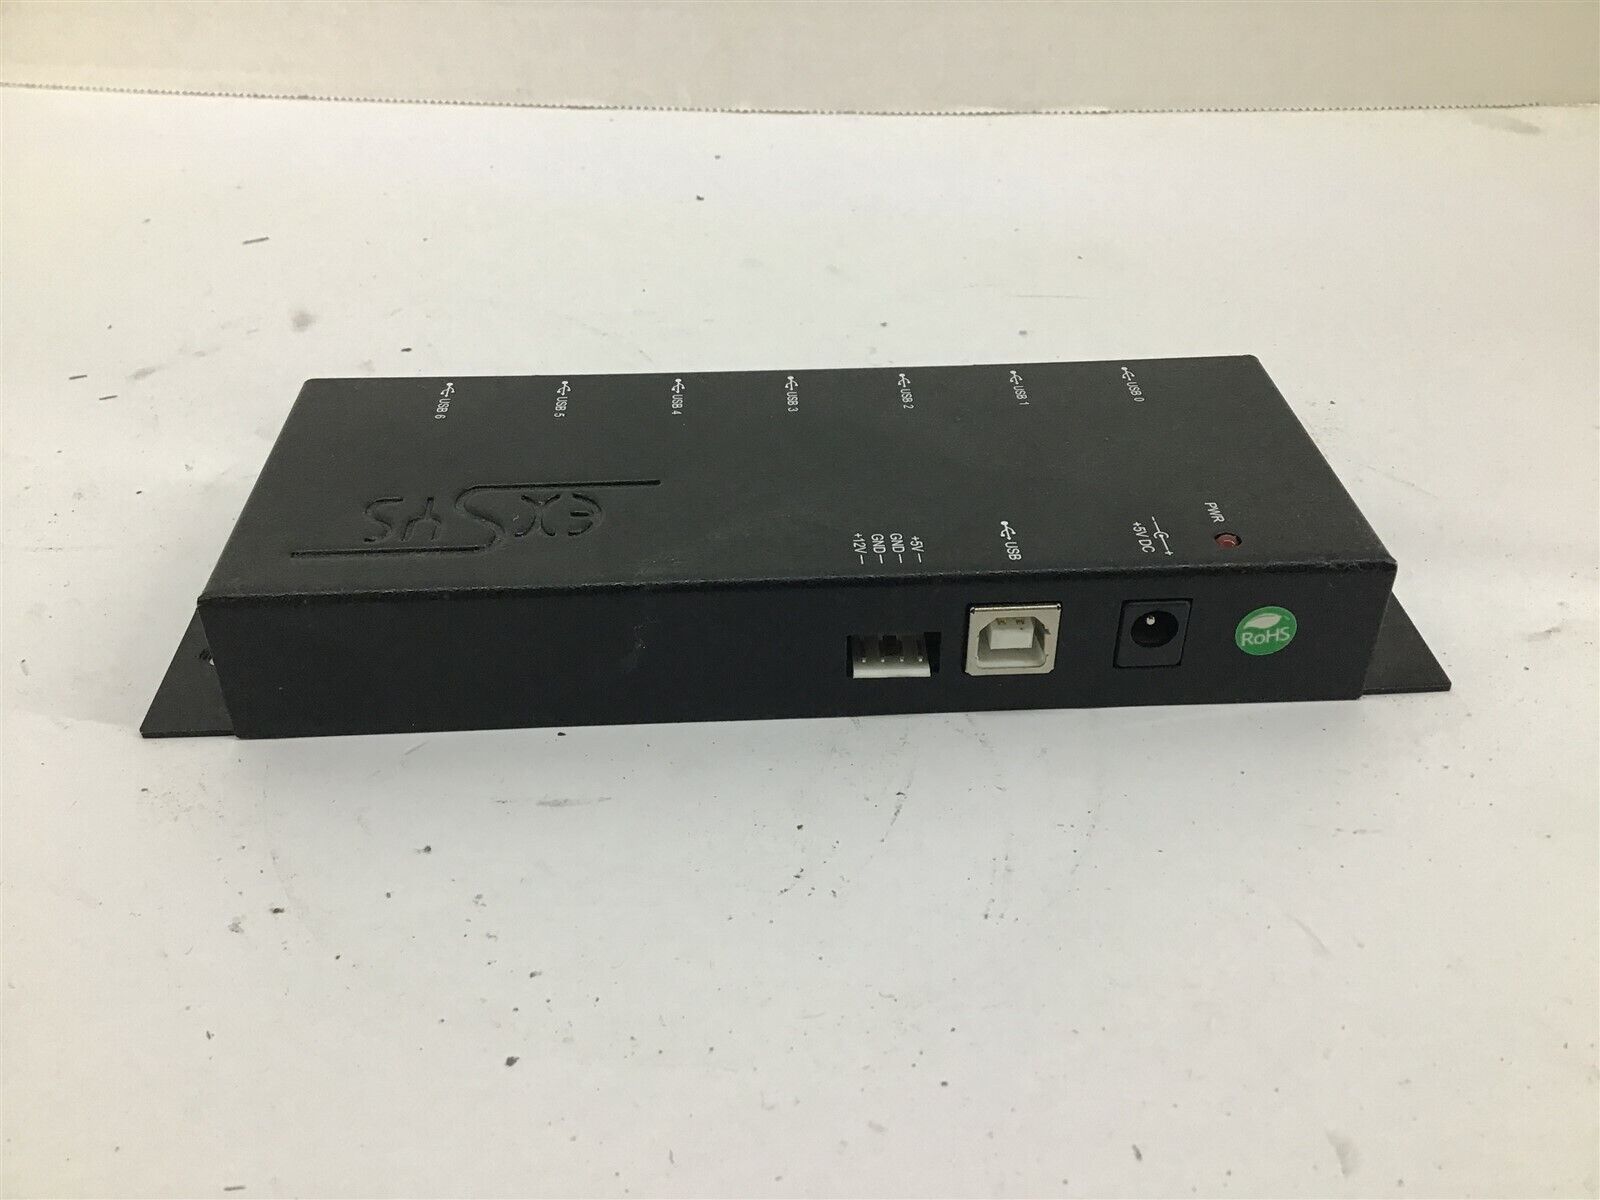 Exsys 607926654 USB Hub 6-Port 